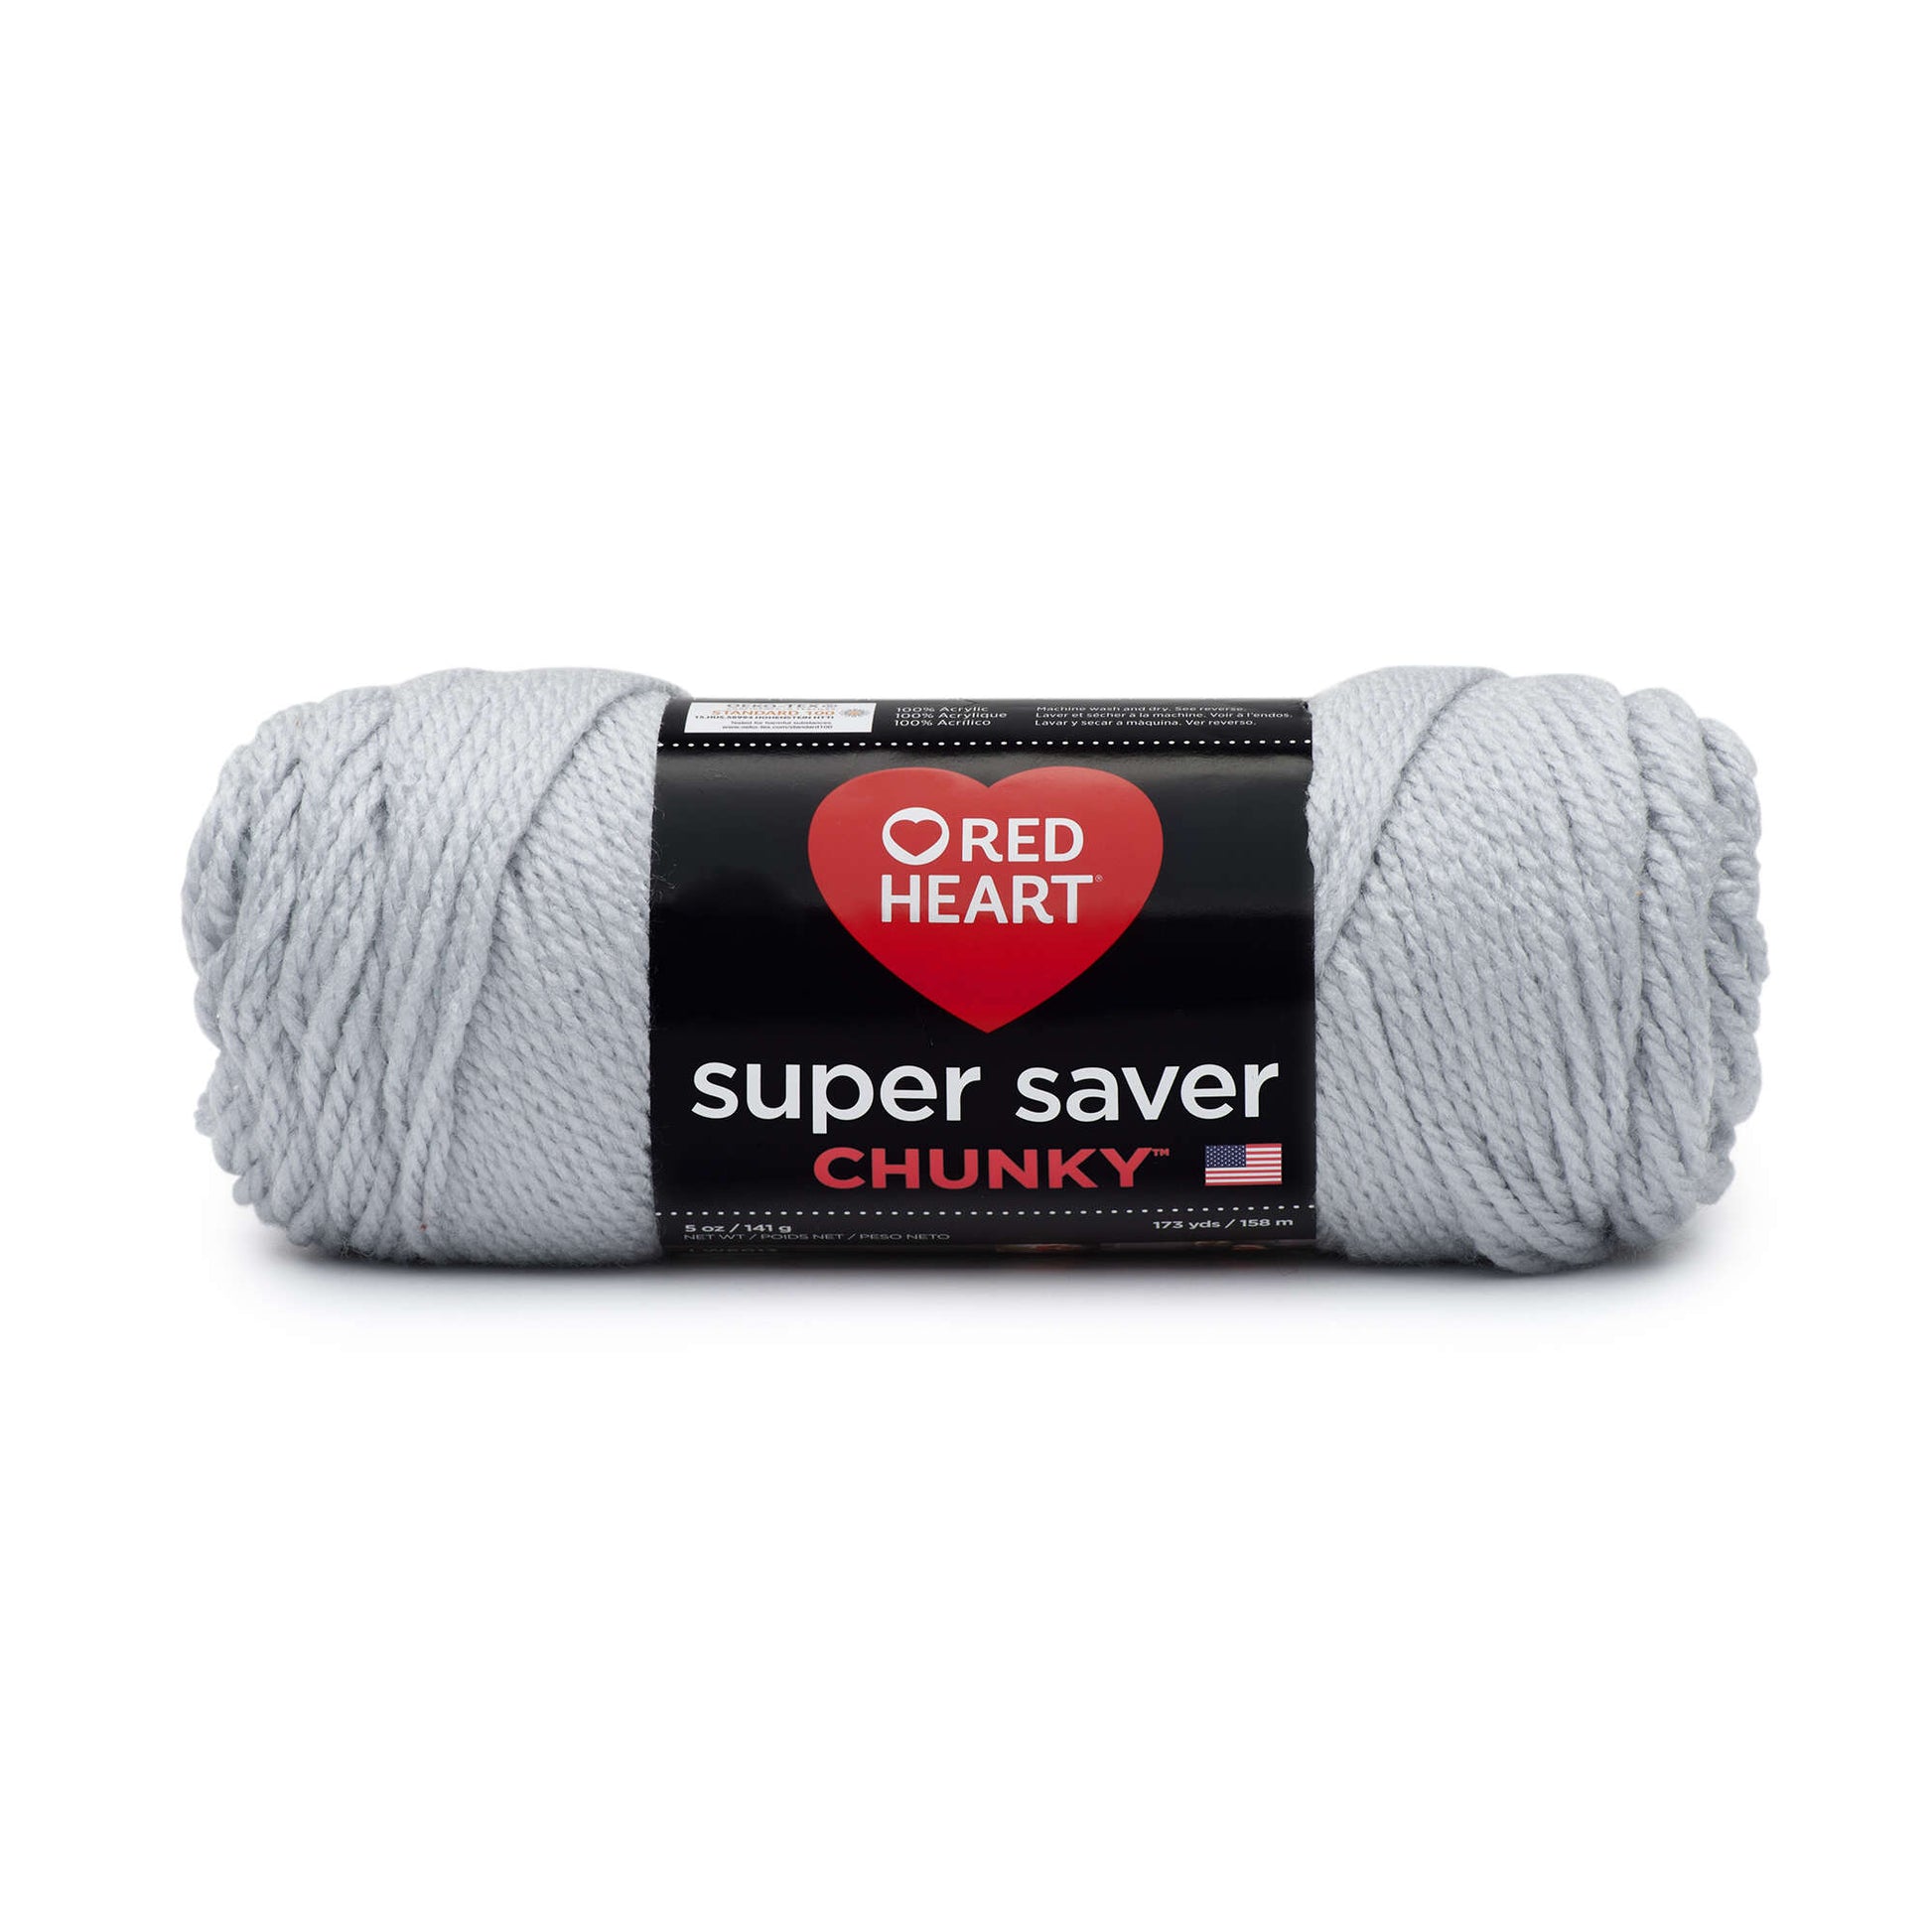 Red Heart Super Saver Chunky Yarn - Clearance shades Light Gray